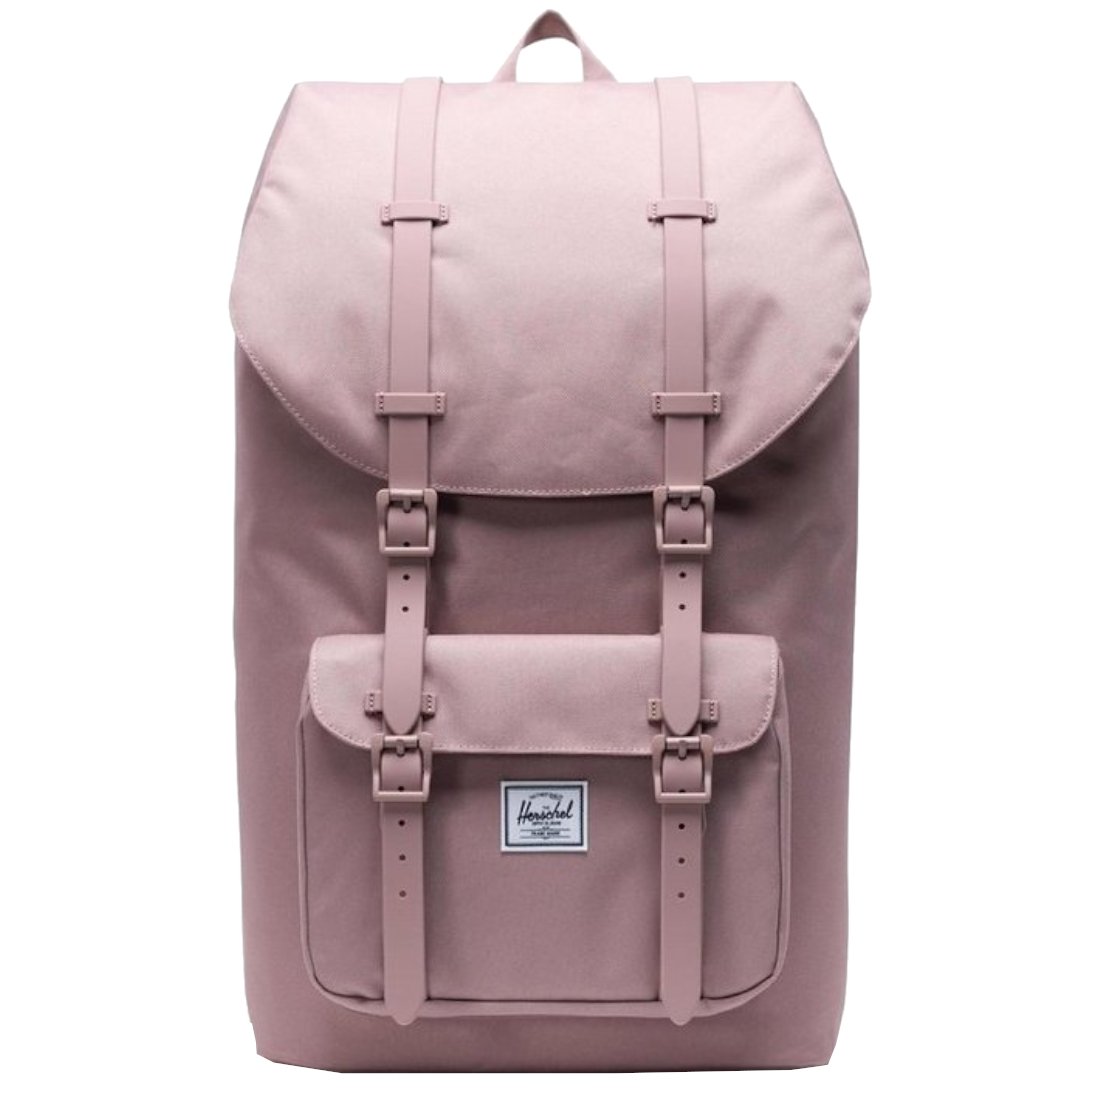 Herschel Little America Backpack 10014-02077, różowy plecak, pojemność: 25 L